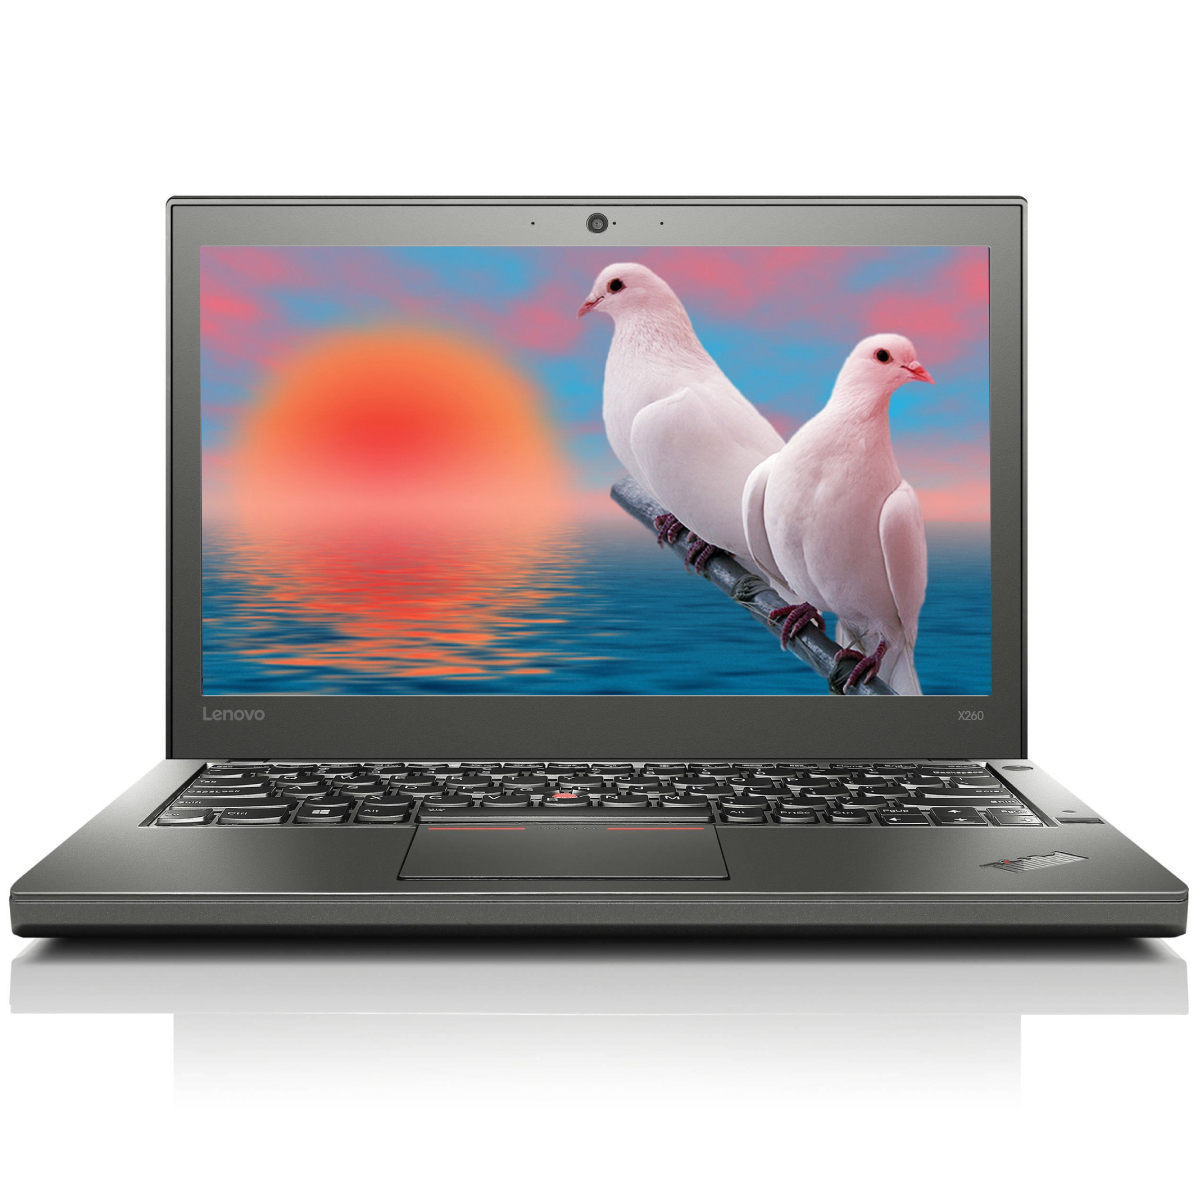 Lenovo ThinkPad X260 12.5 1366x768 i5-6200U 8GB 128SSD WIN10Pro RENEW AB2792 (ABC051152792)